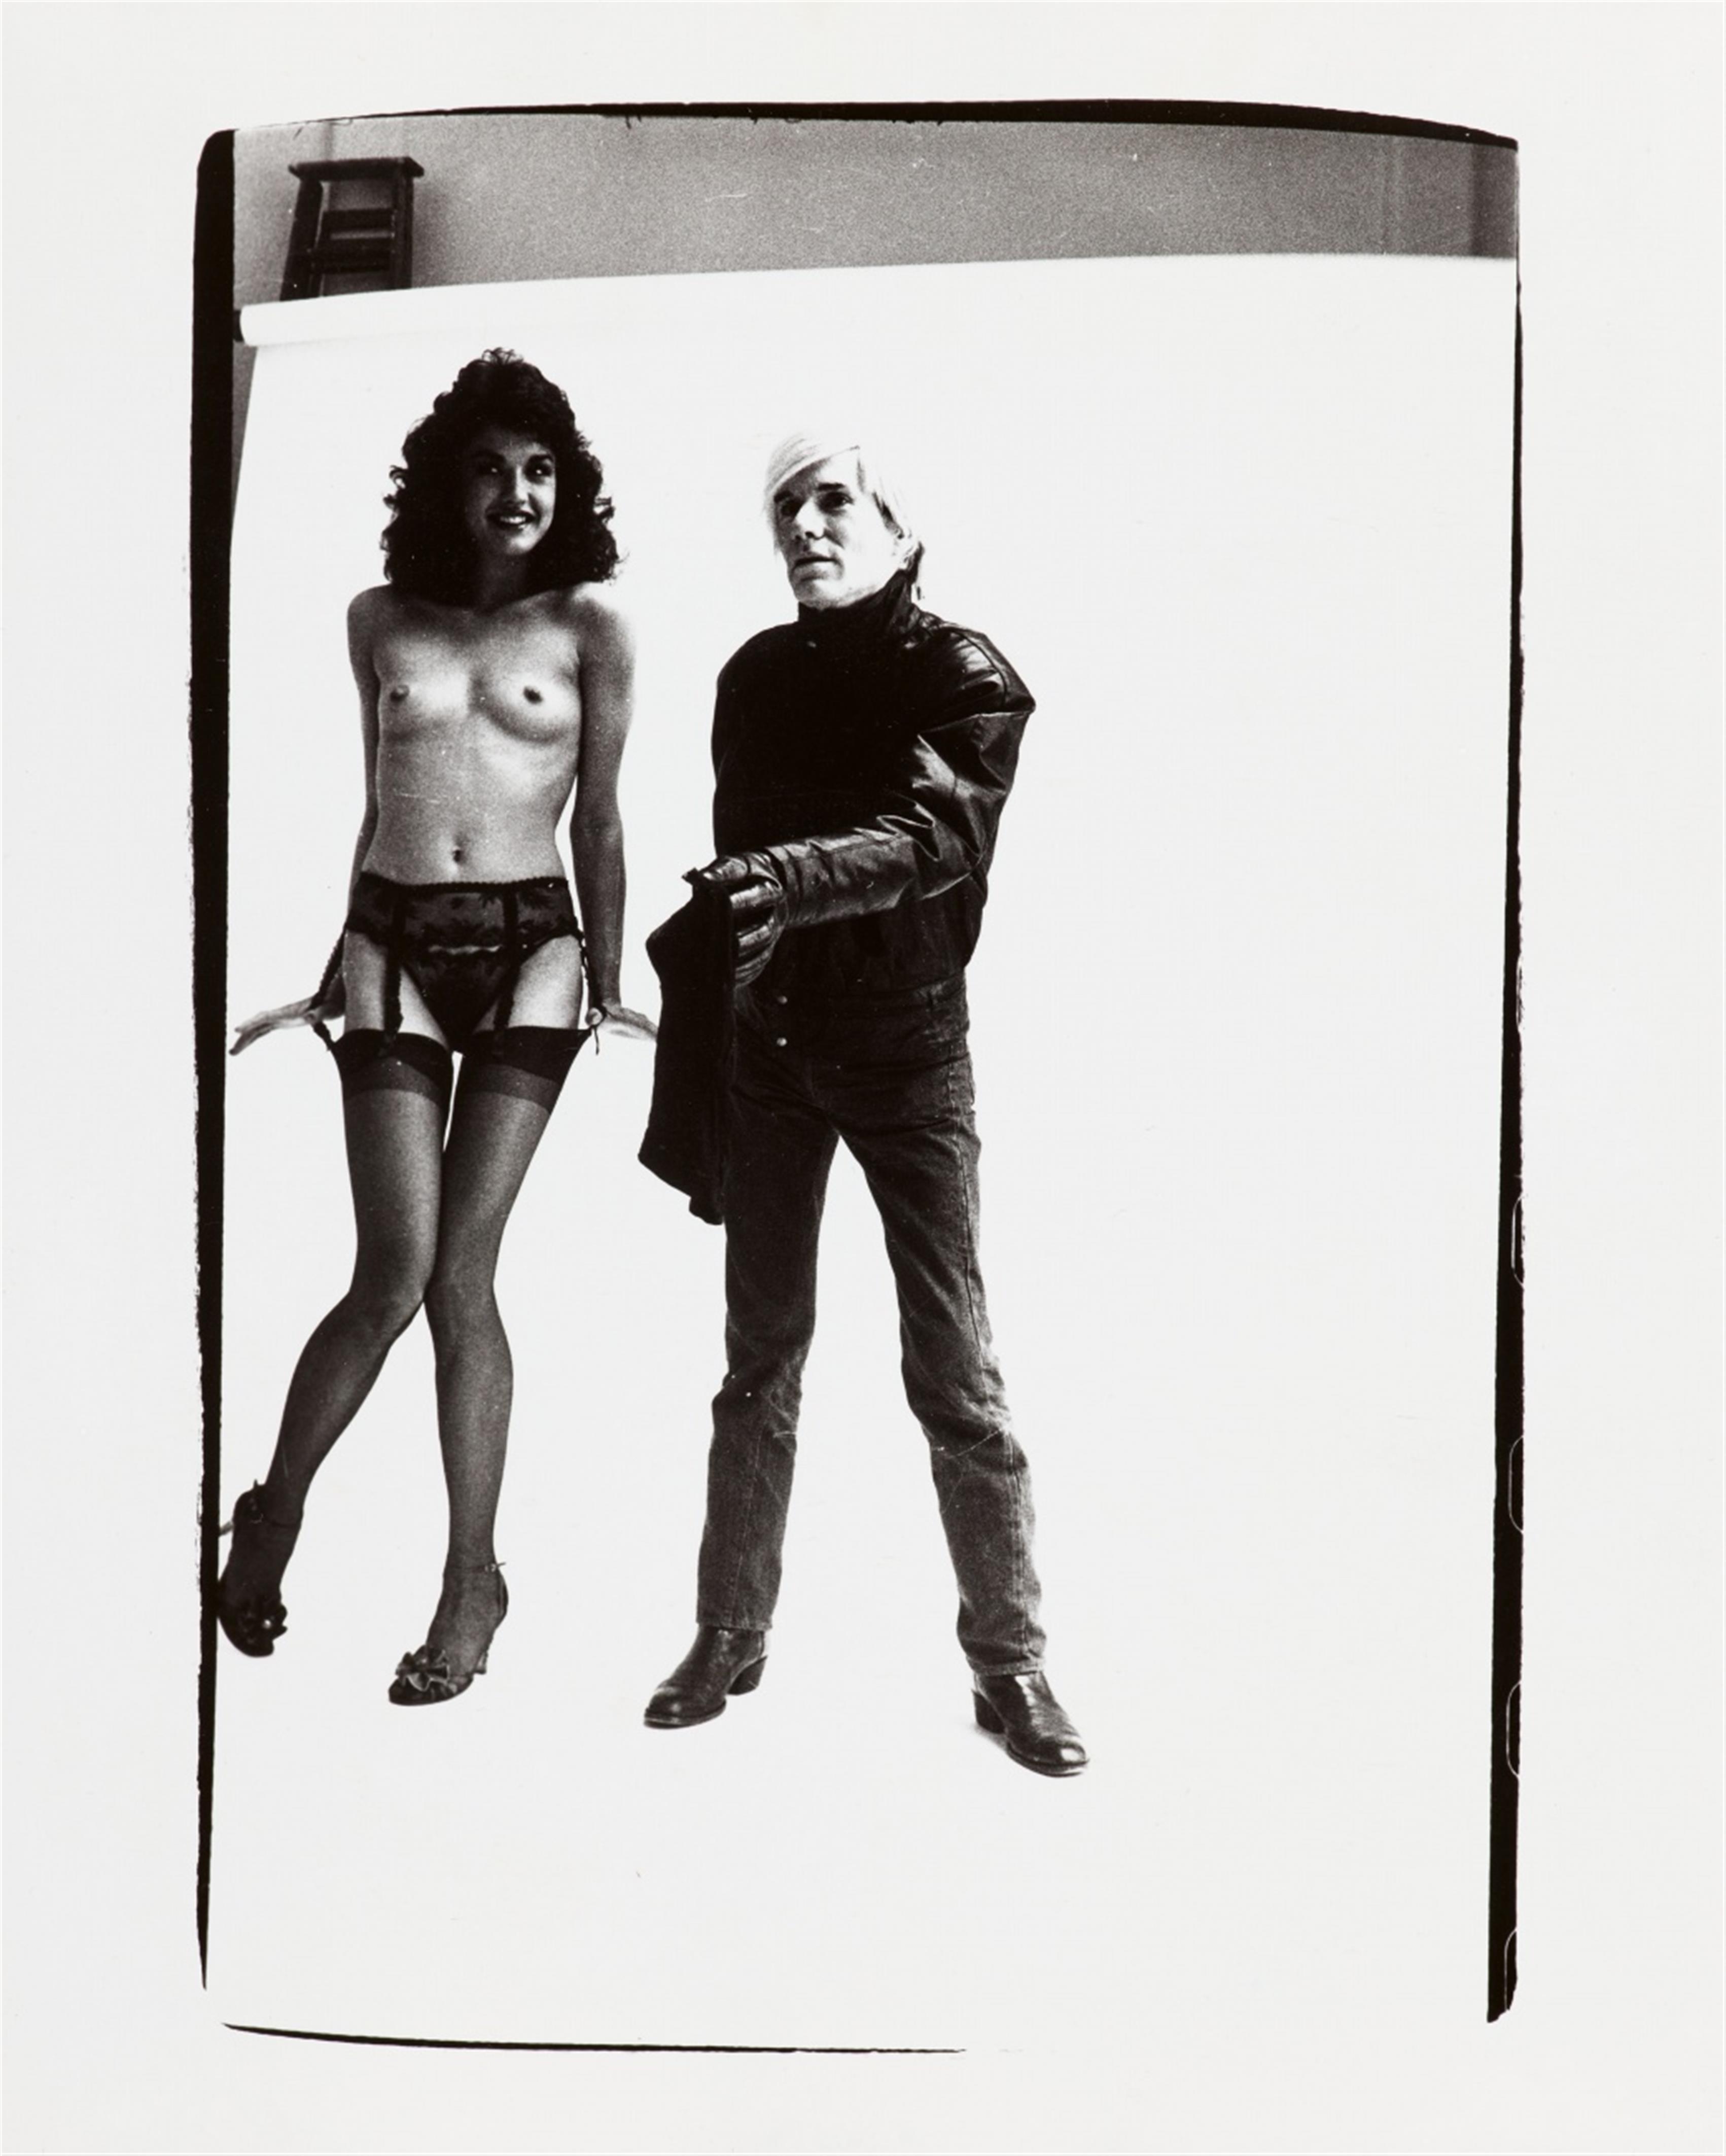 Andy Warhol - Self portrait with Janice Dickinson - image-1